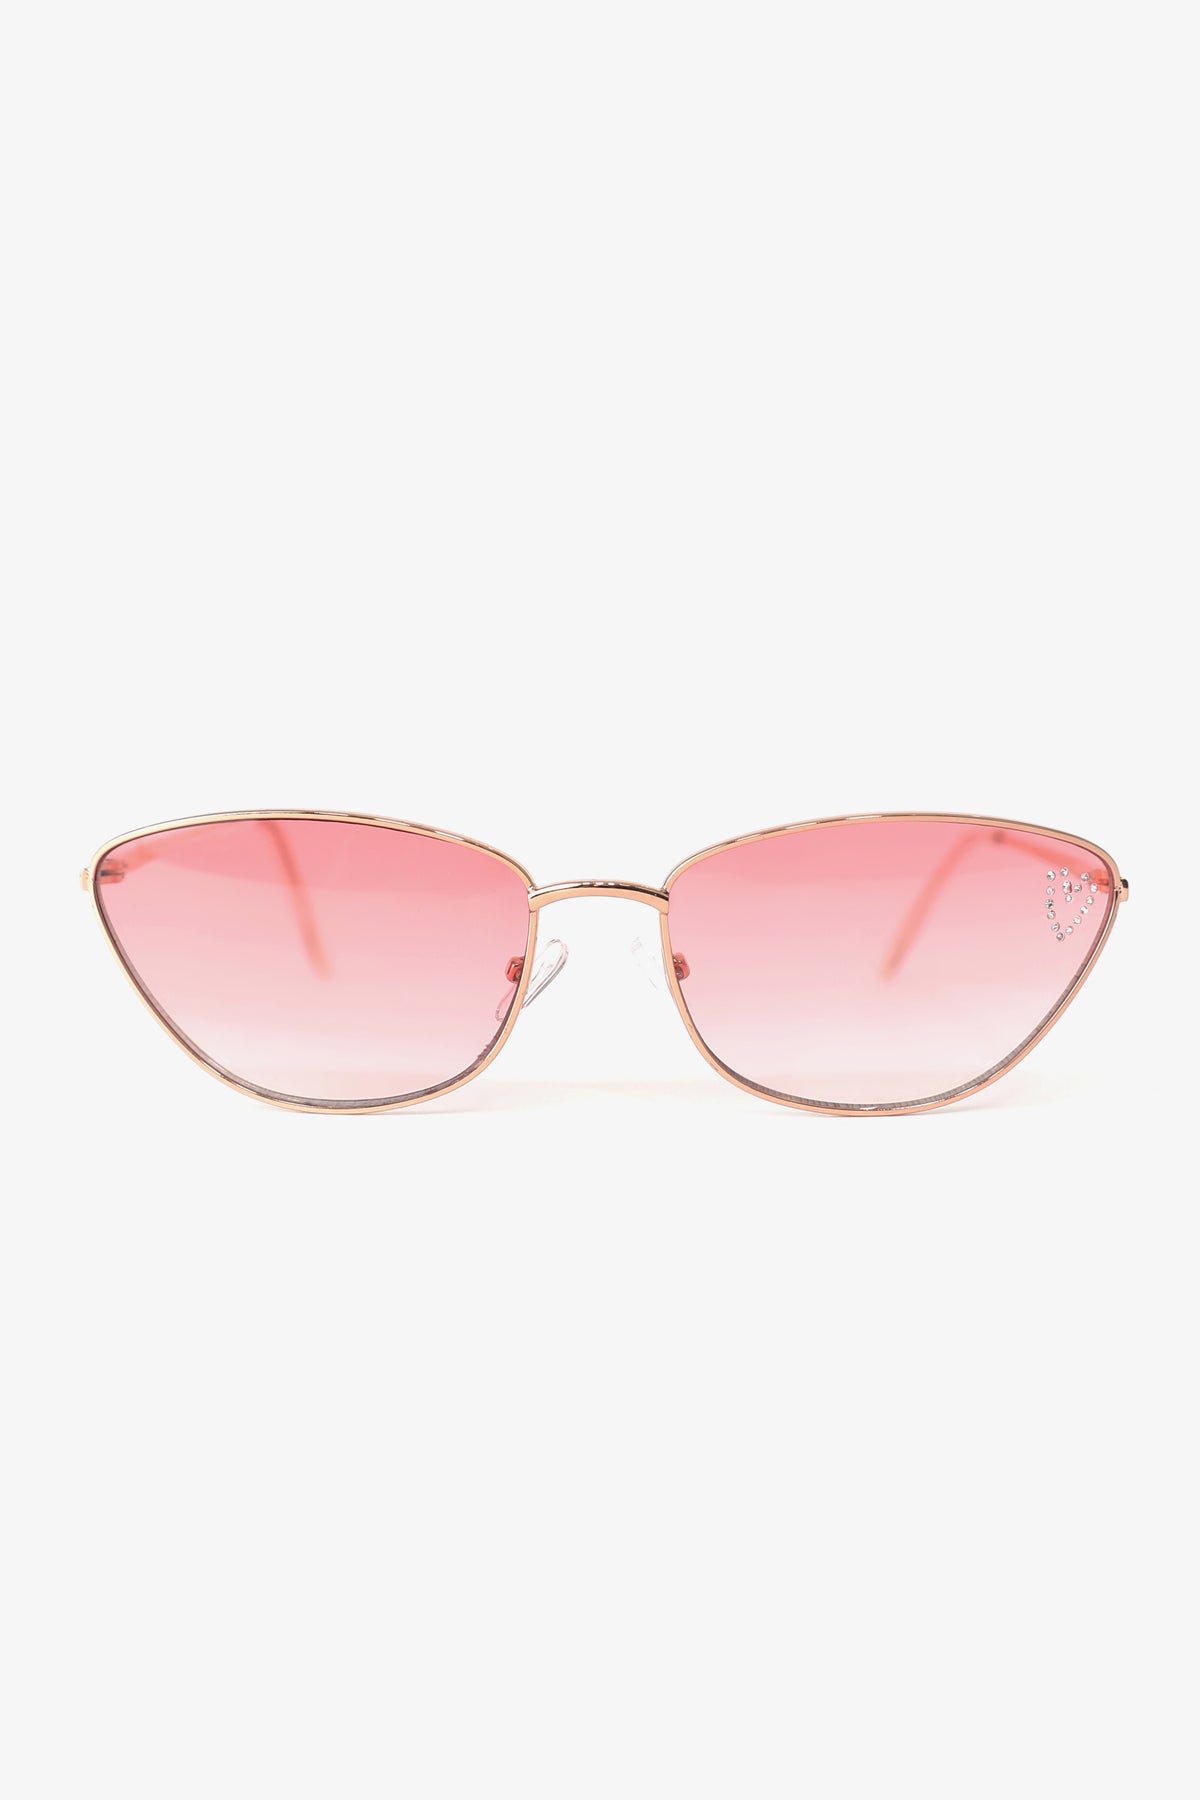 The Vivianne pink cat eye sunglasses. 